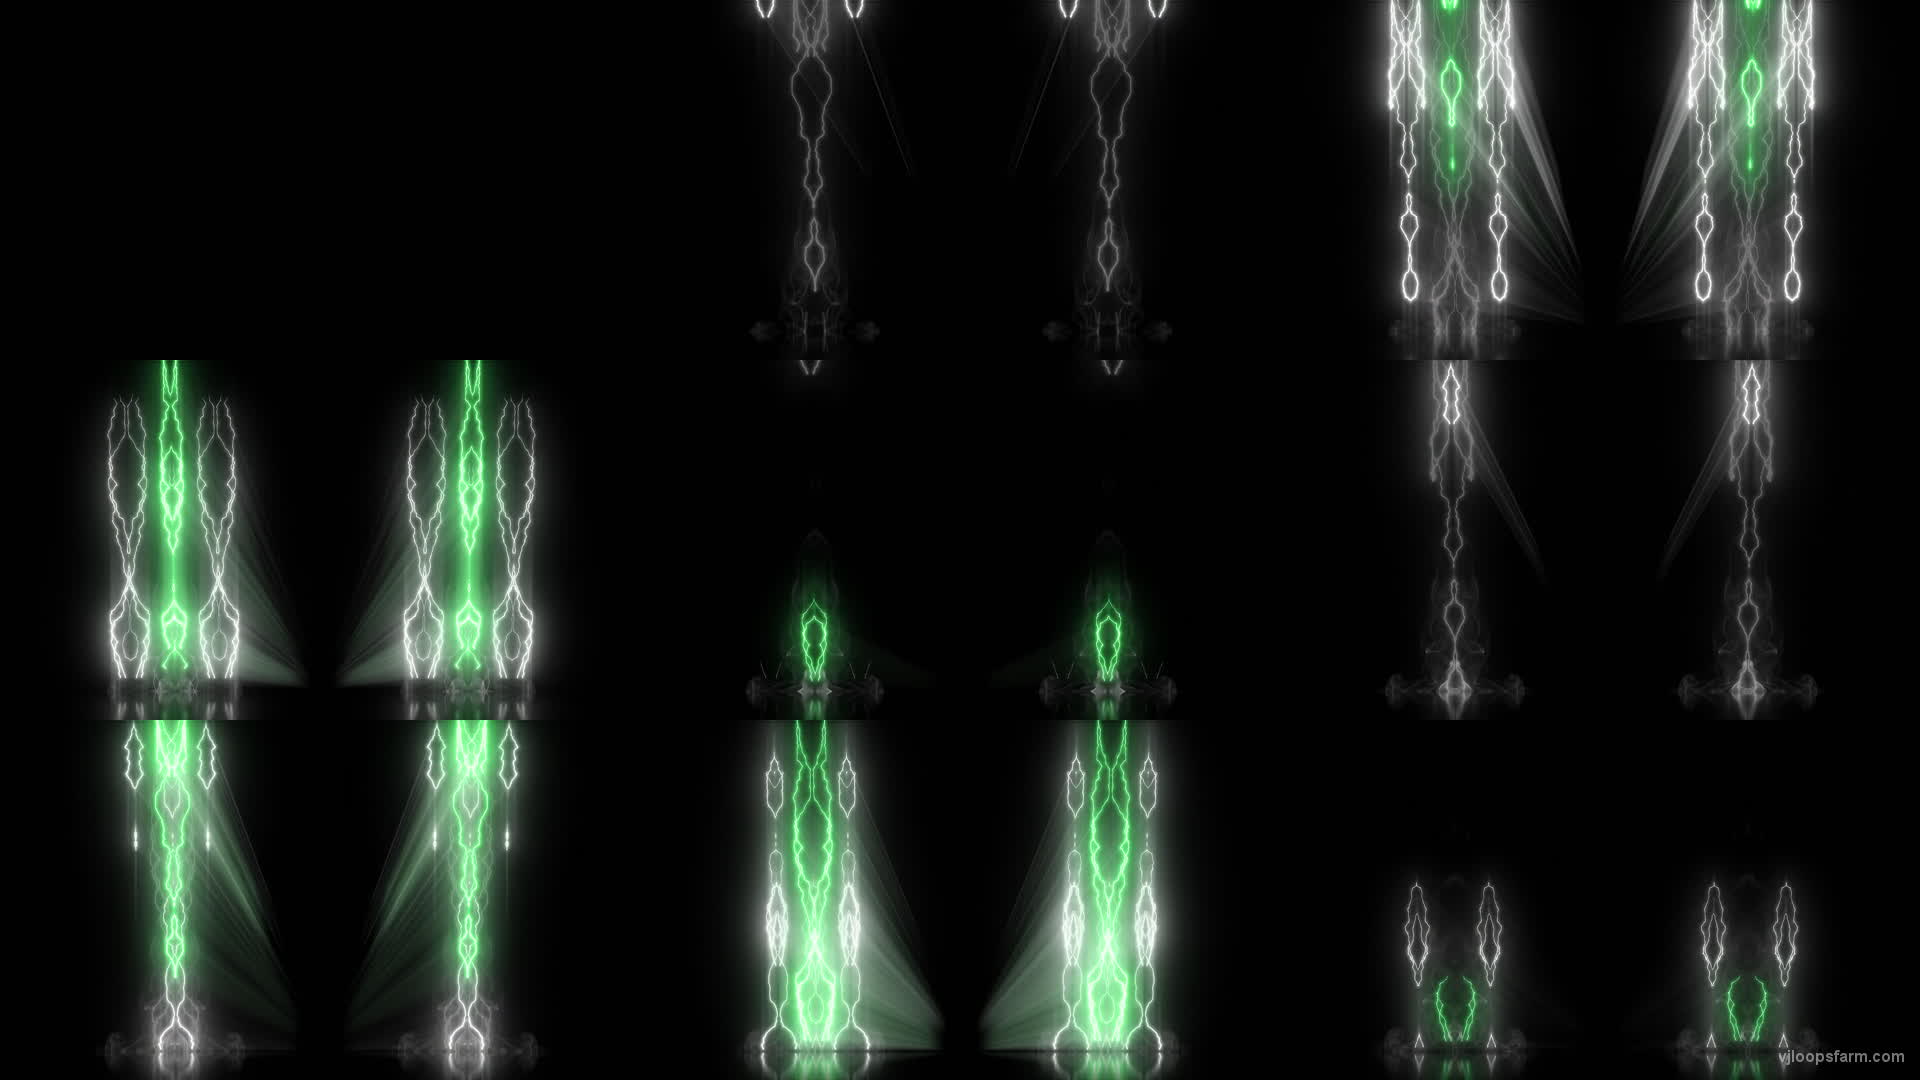 Gnosis Abstract Lightning beats Green Temple Columns Ultra HD Video Art loop VJ Clip